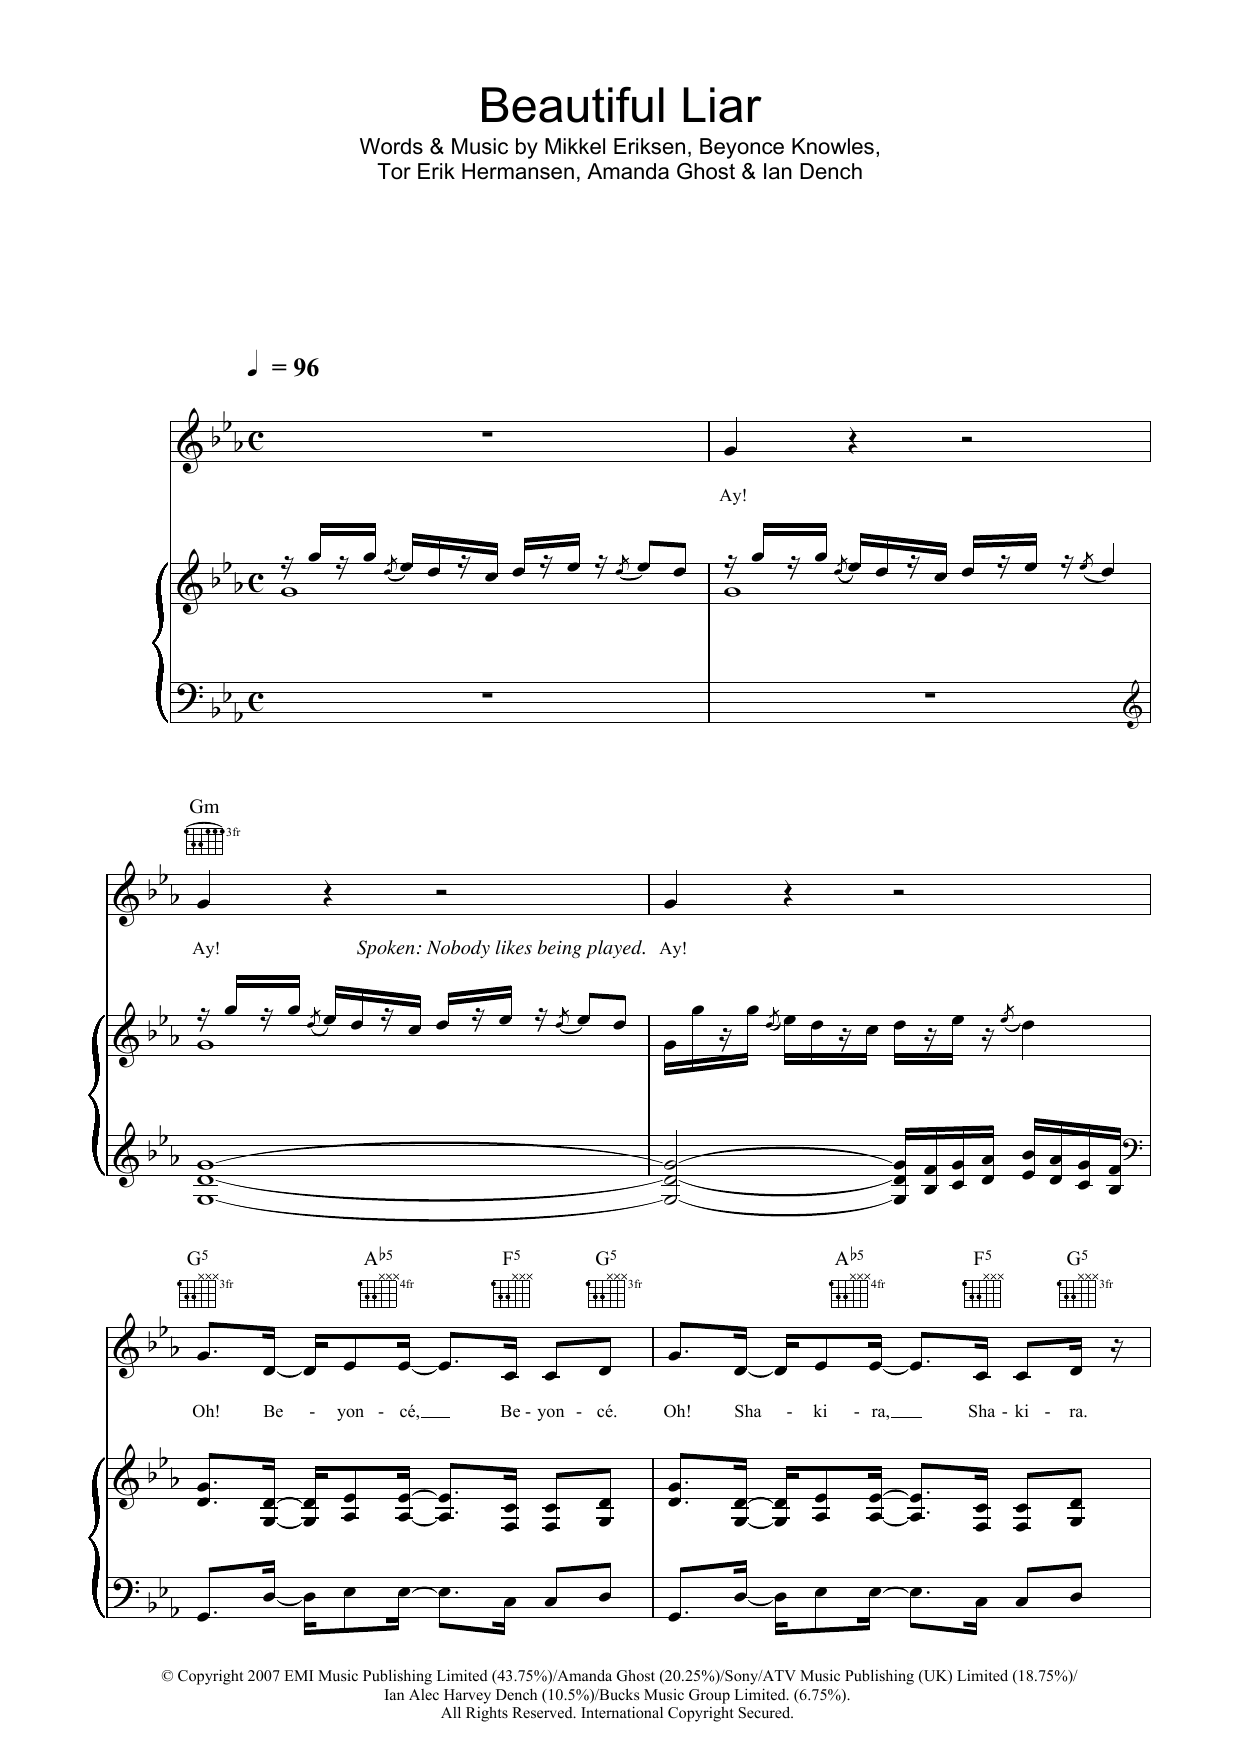 Beyoncé Beautiful Liar Sheet Music Notes & Chords for Piano, Vocal & Guitar - Download or Print PDF